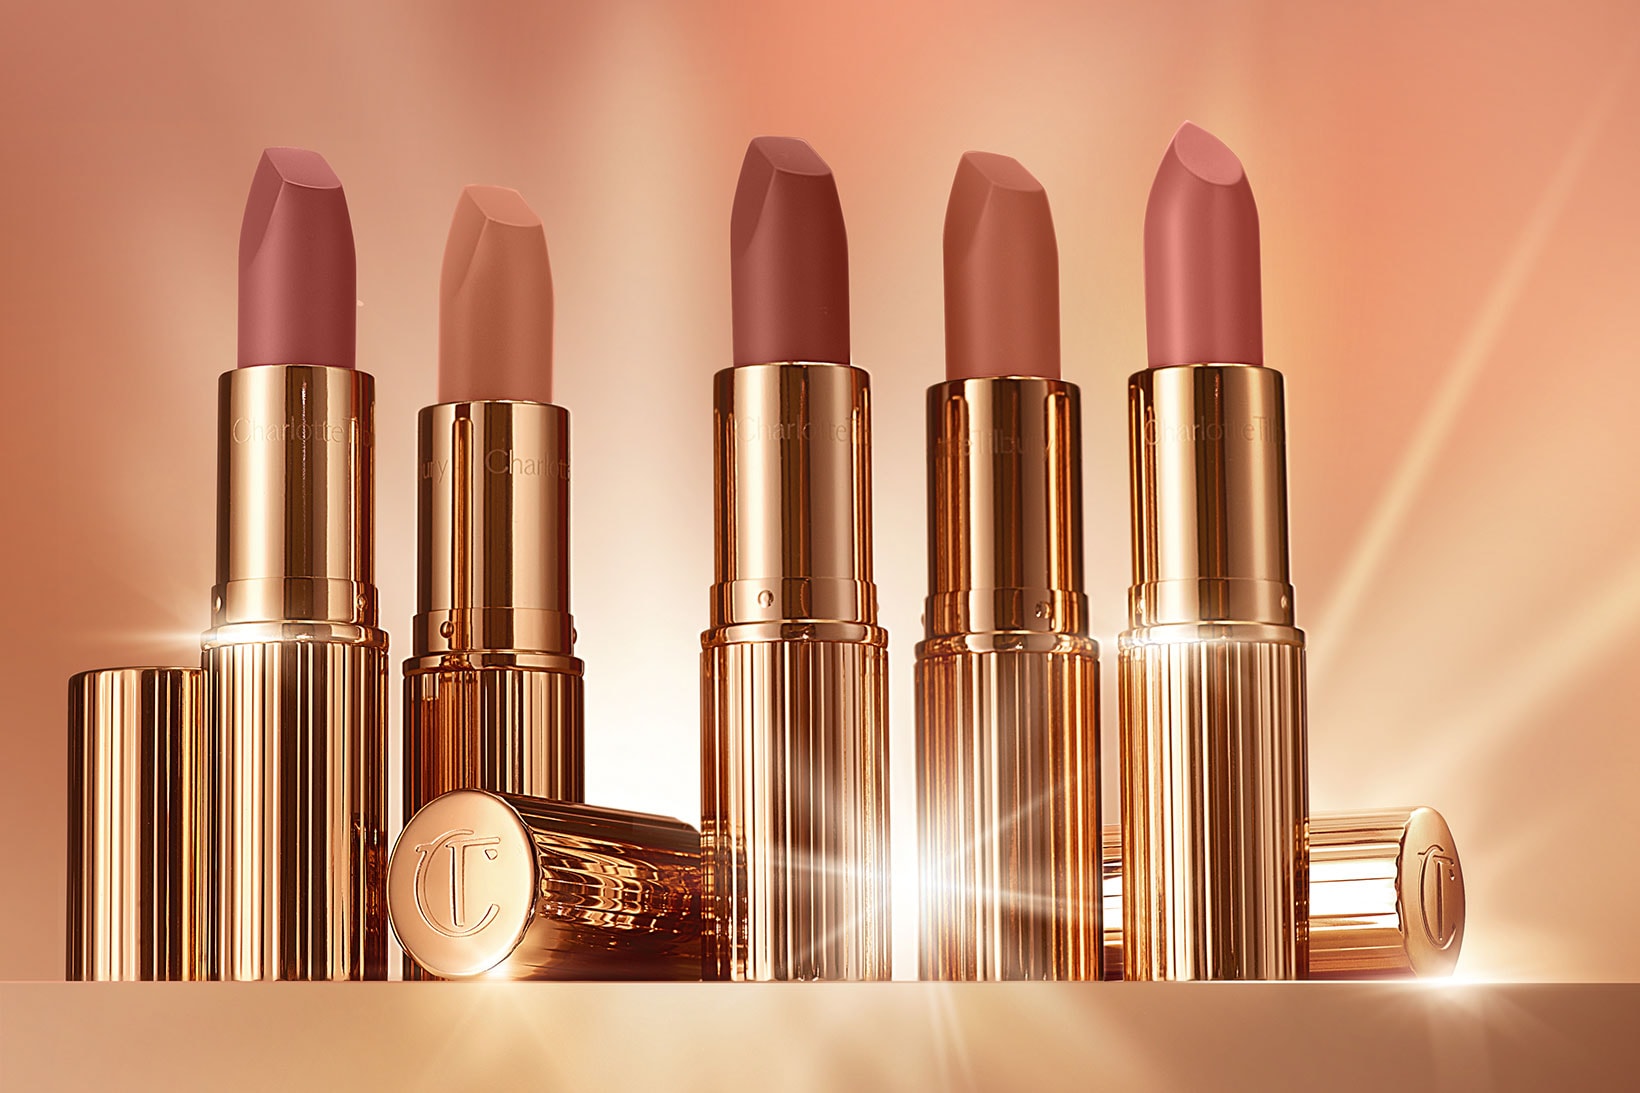 Charlotte Tilbury Super Nudes Makeup Collection Lipsticks